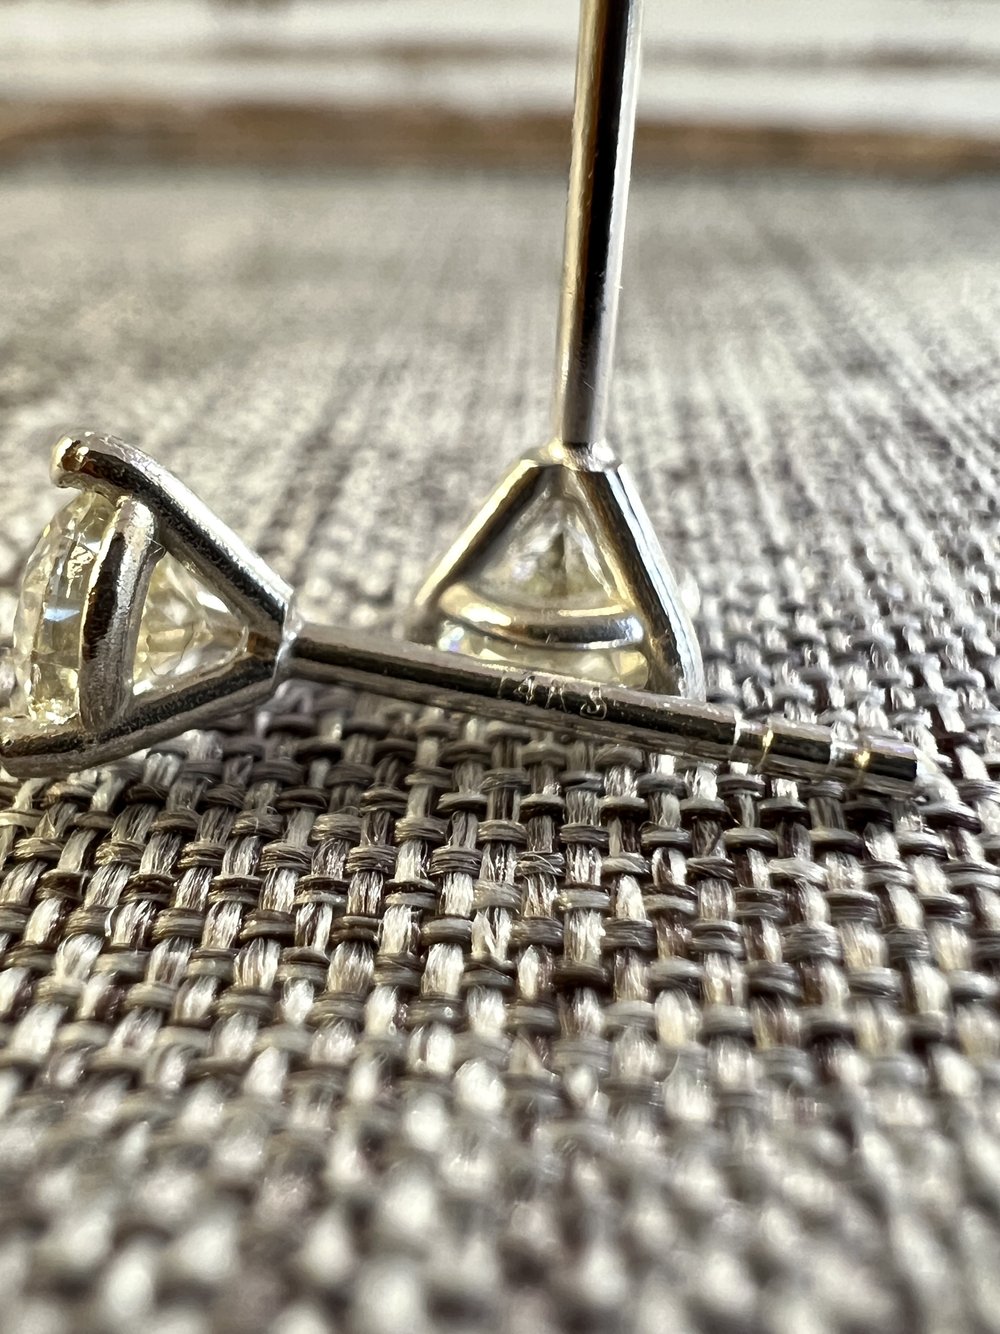 Martini Diamond Earring Studs, 10.01 Carats